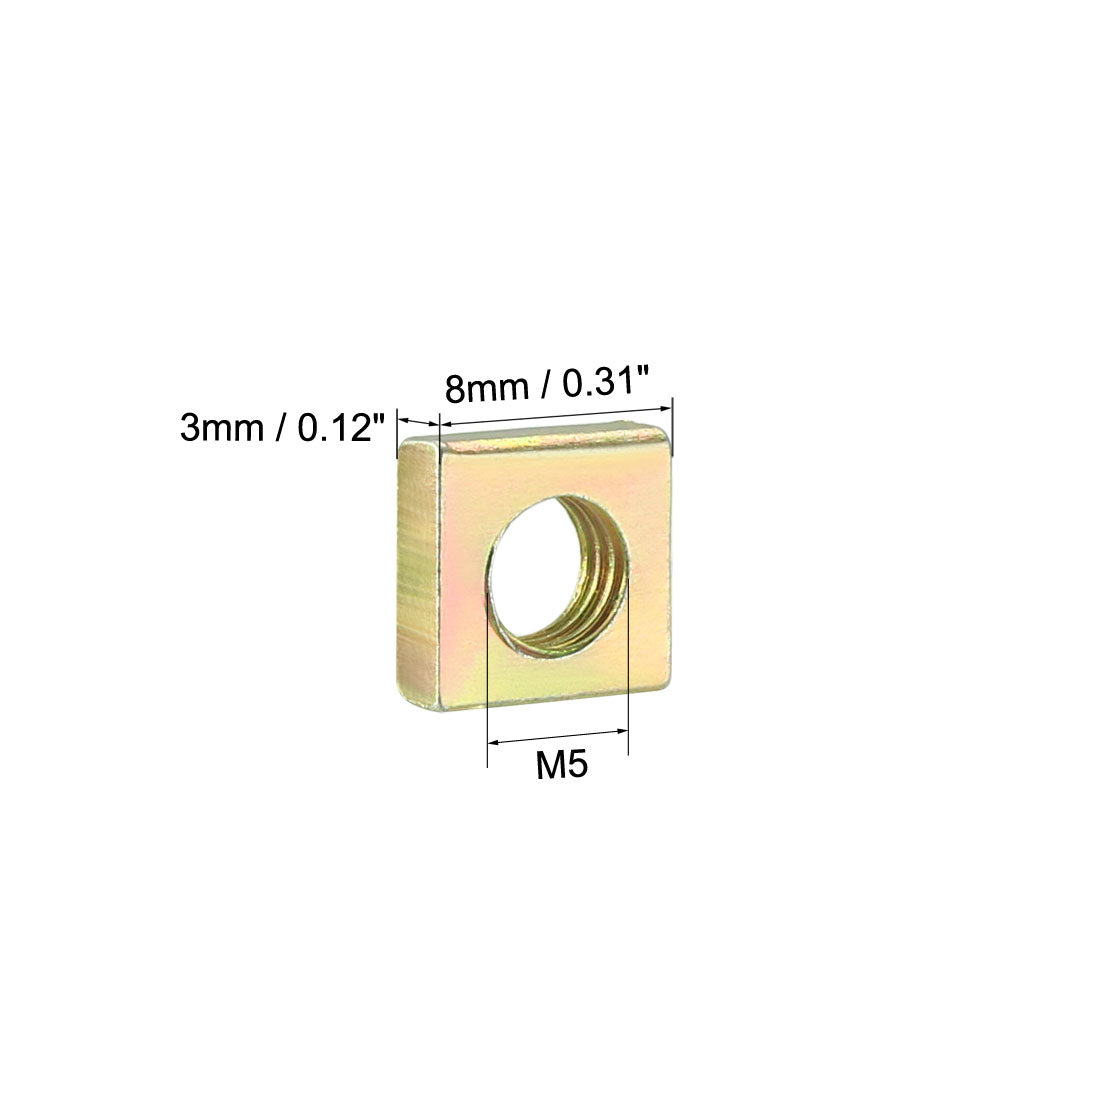 uxcell Uxcell Square Nuts, M5x8mmx3mm Yellow Zinc Plated Metric Coarse Thread Assortment Kit, 25 Pcs